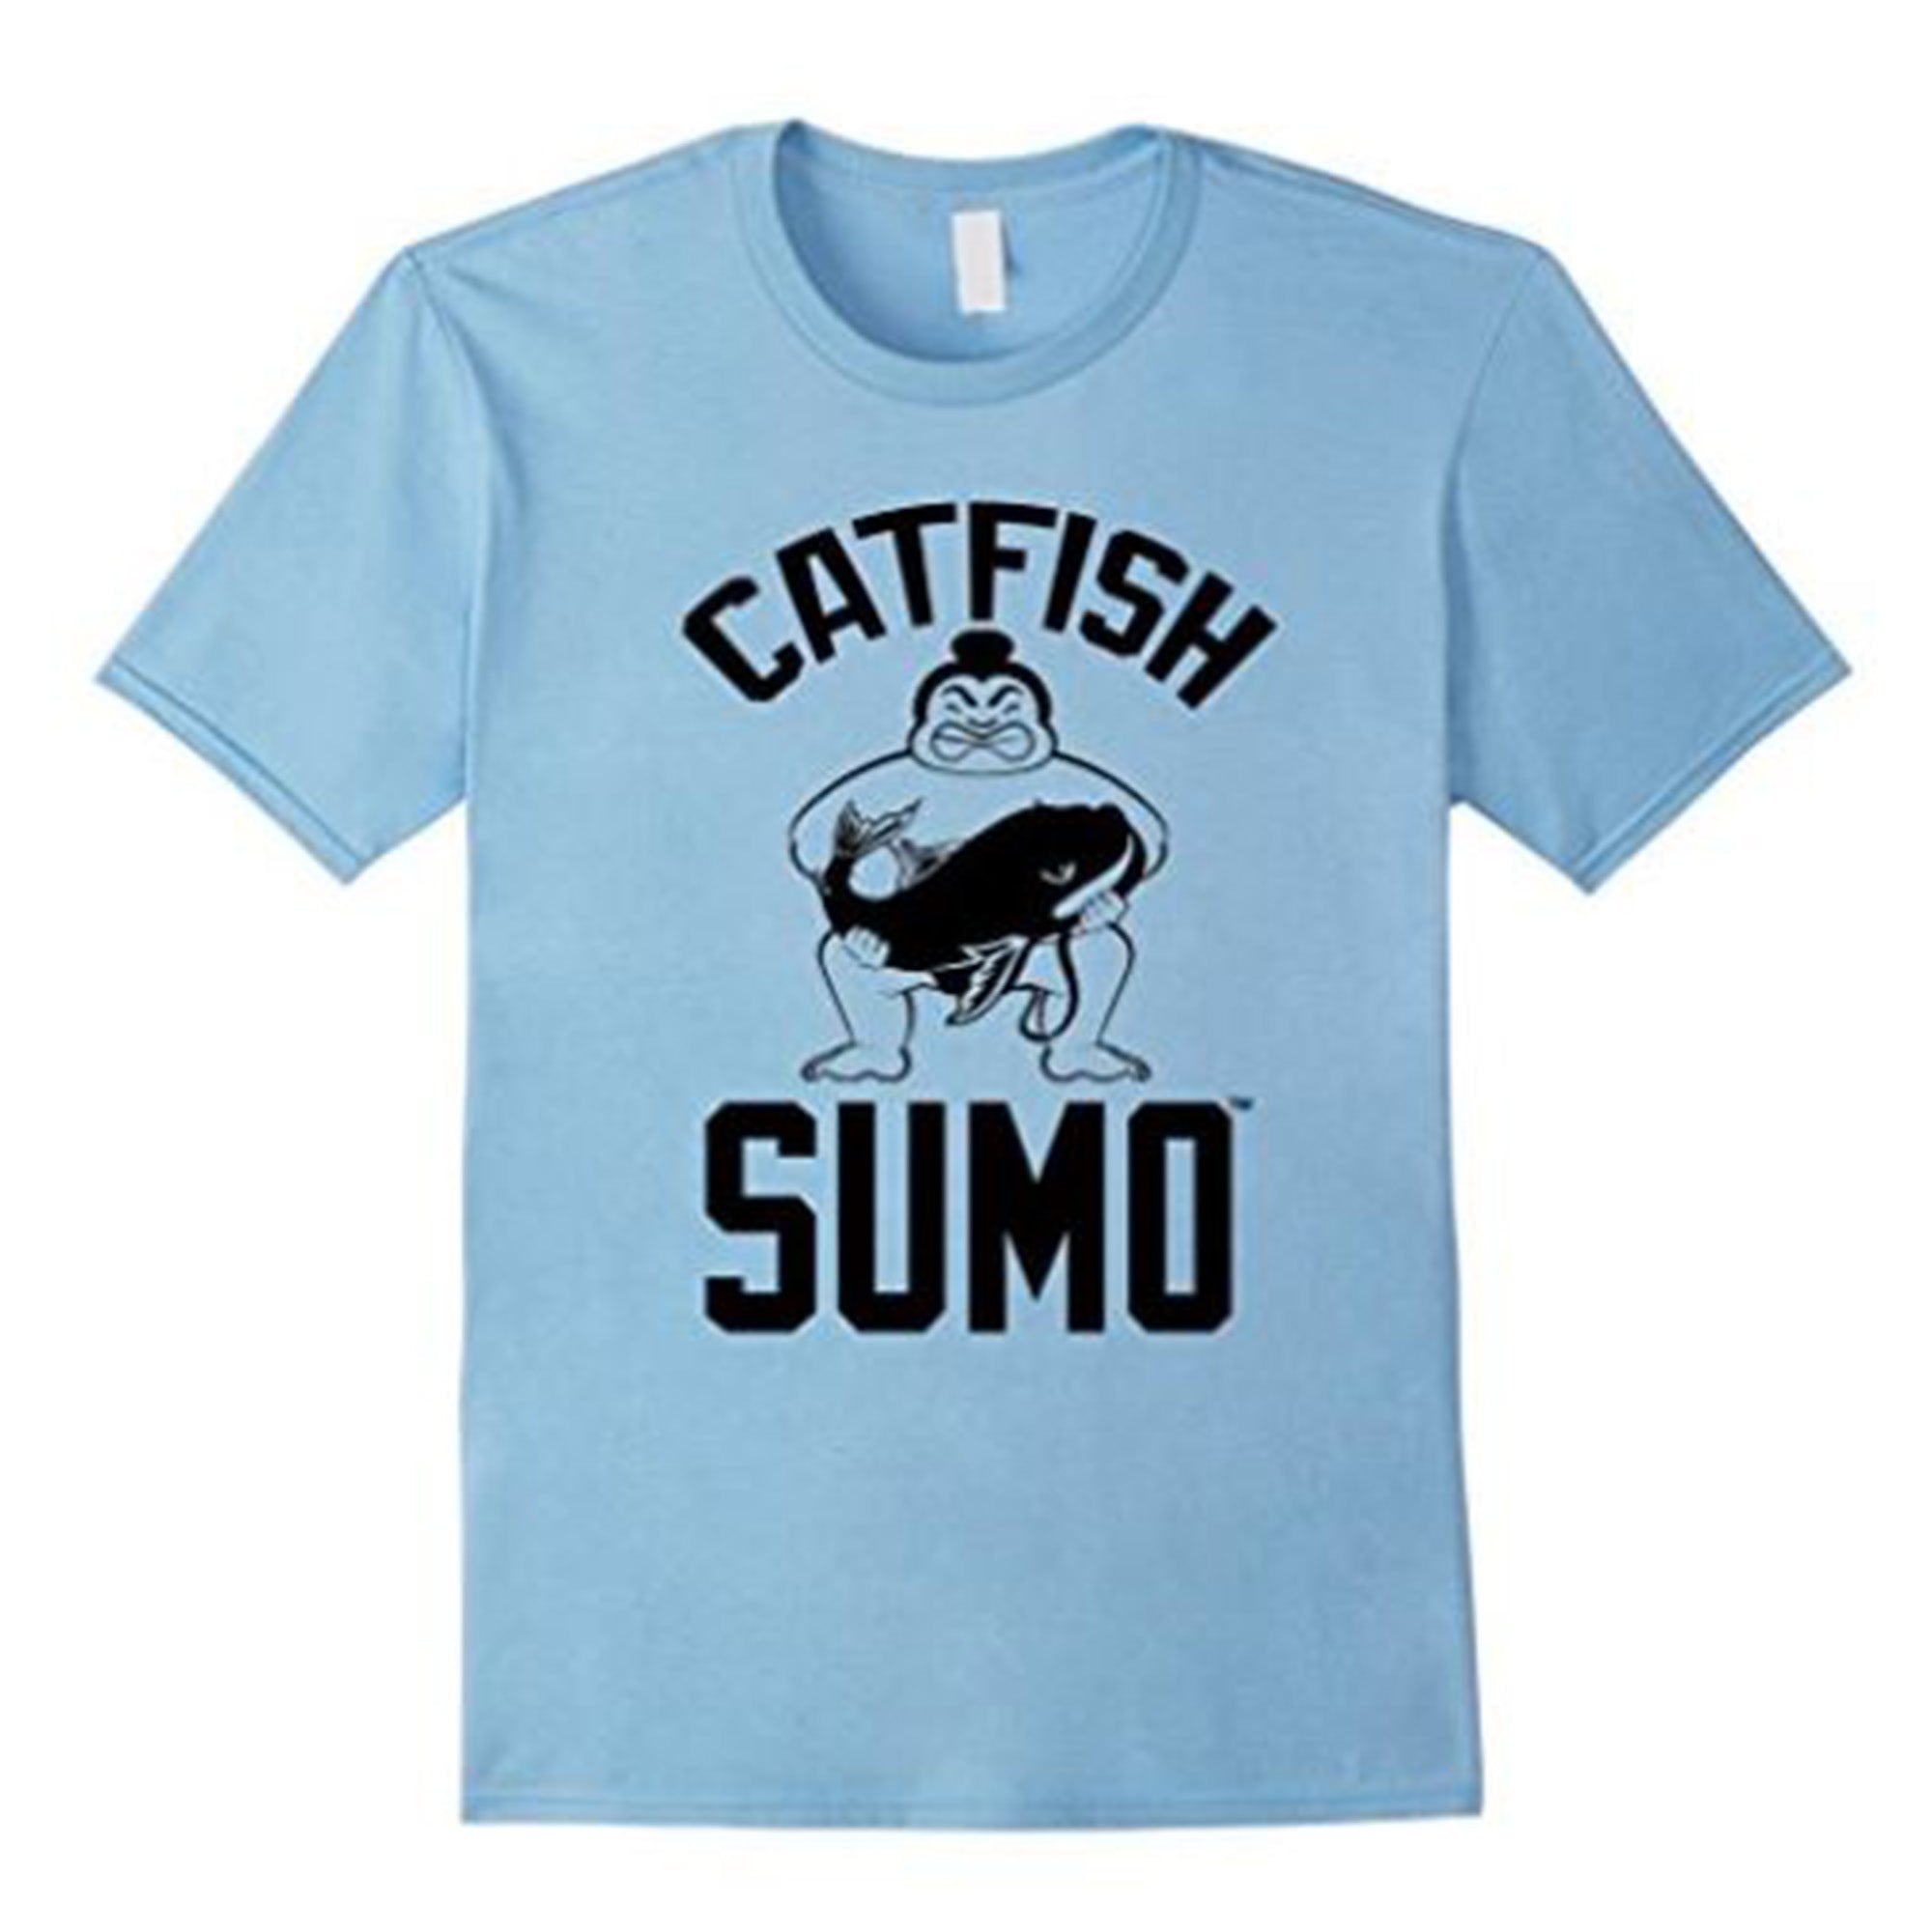 Happy Catfish Sumo Vintage Shirt - Teeshirtcat